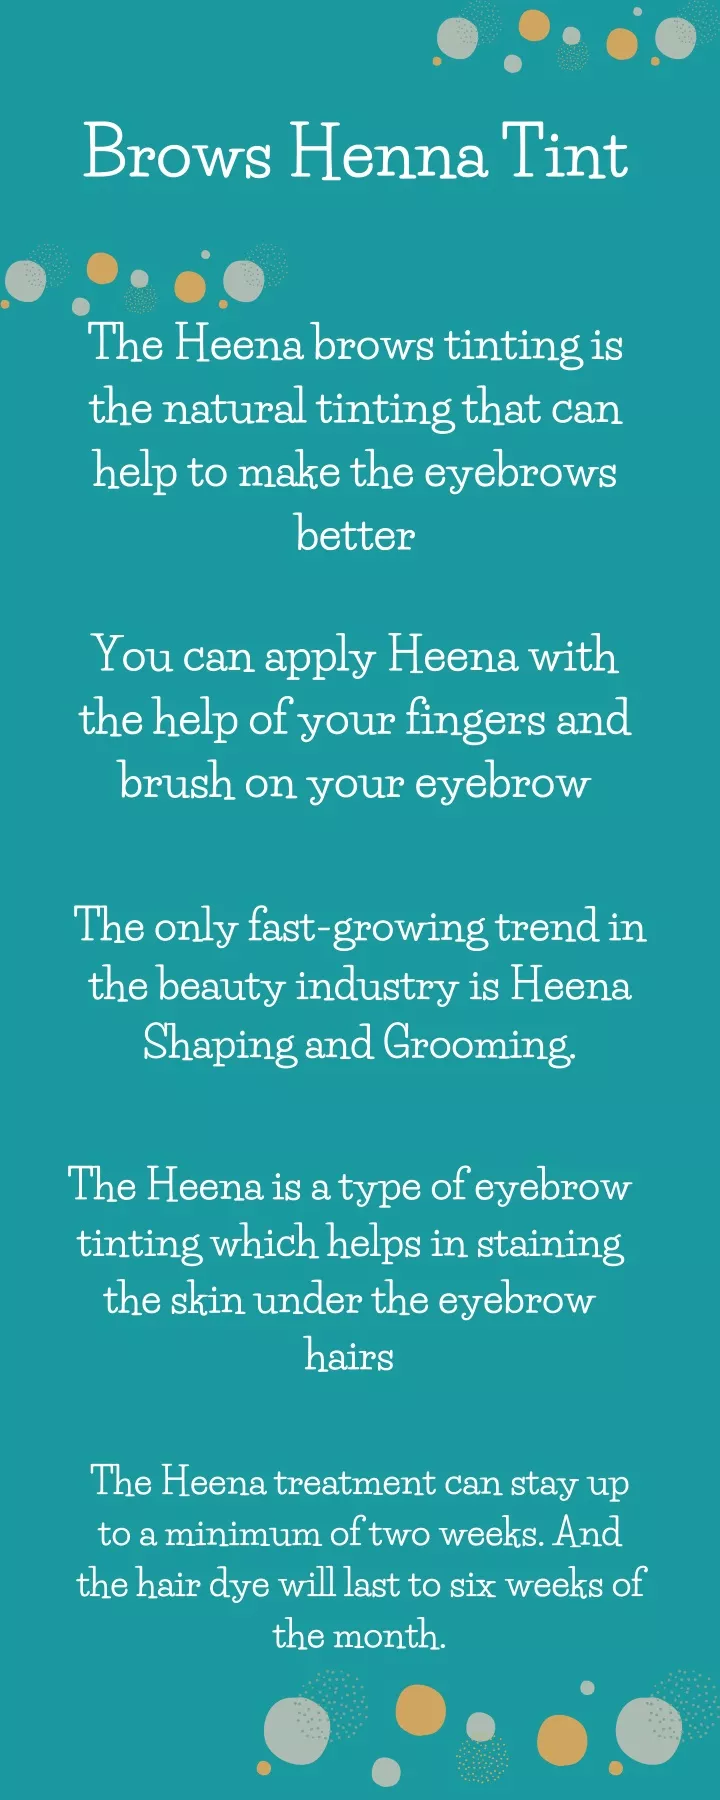 brows henna tint